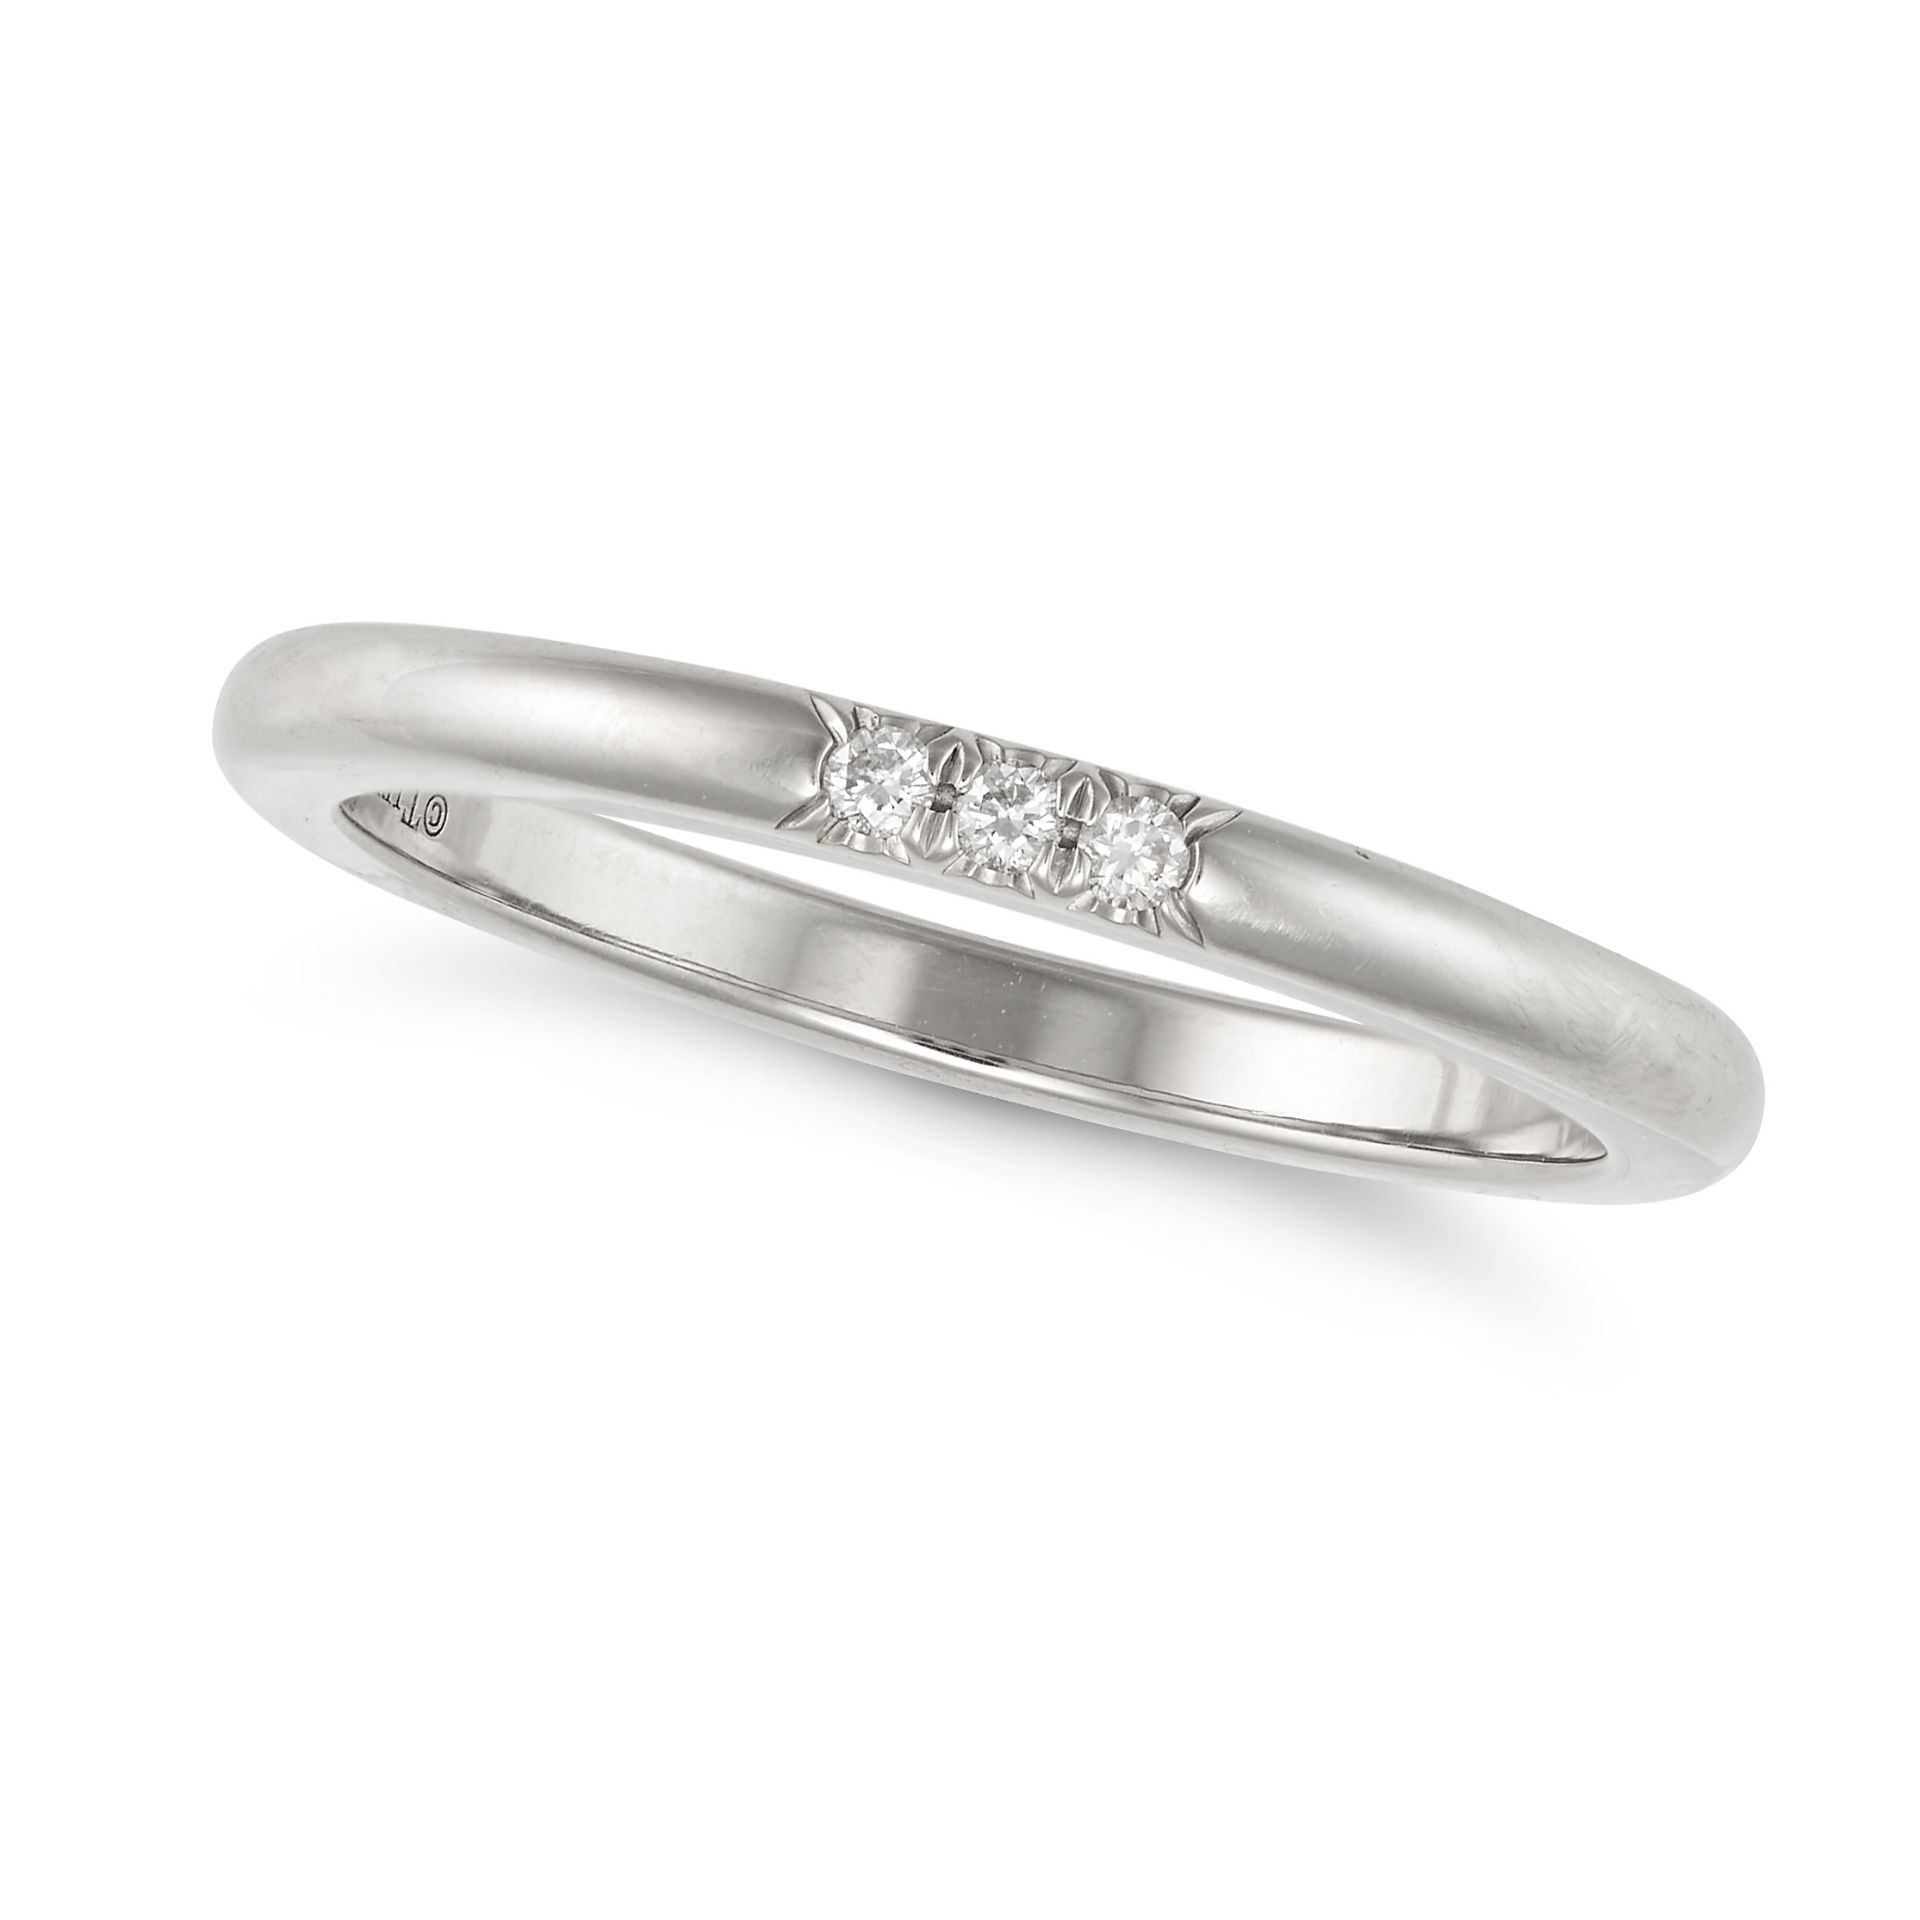 NO RESERVE - TIFFANY & CO., A DIAMOND RING set with three round cut diamonds, signed Tiffany & Co...